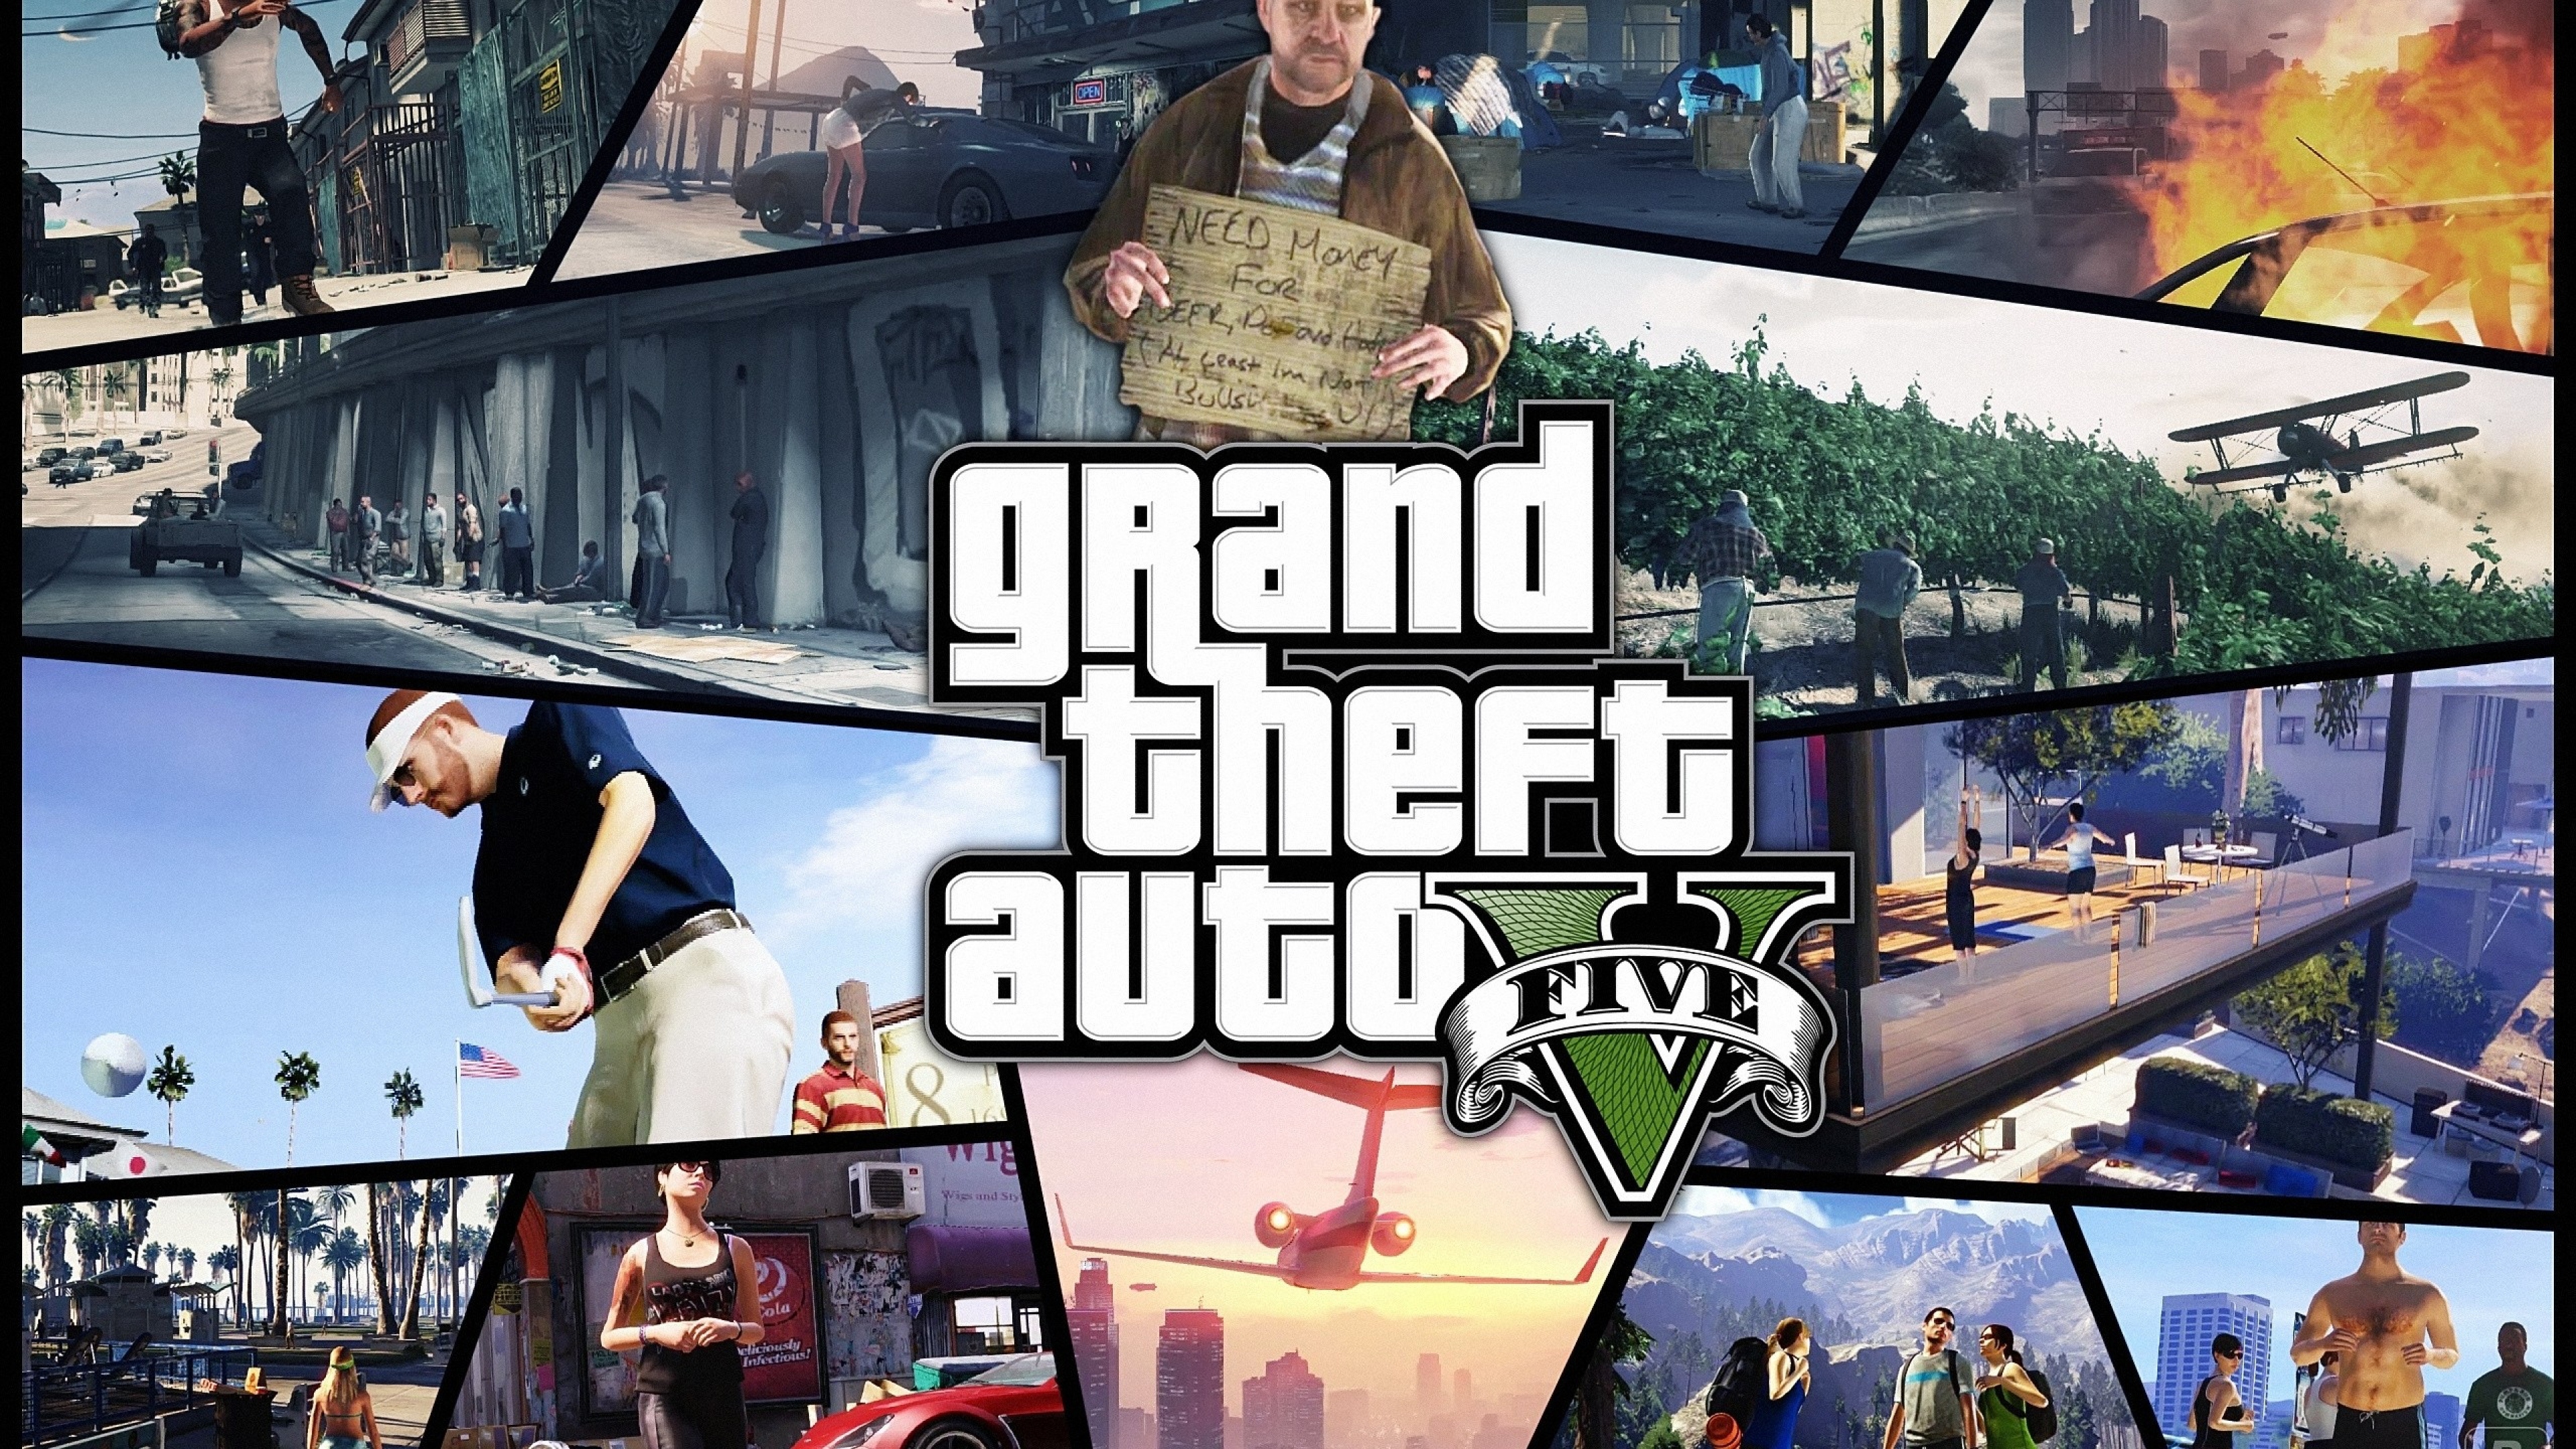 Gta Grand Theft Auto Photos Shots Game Wallpaper Background 4k